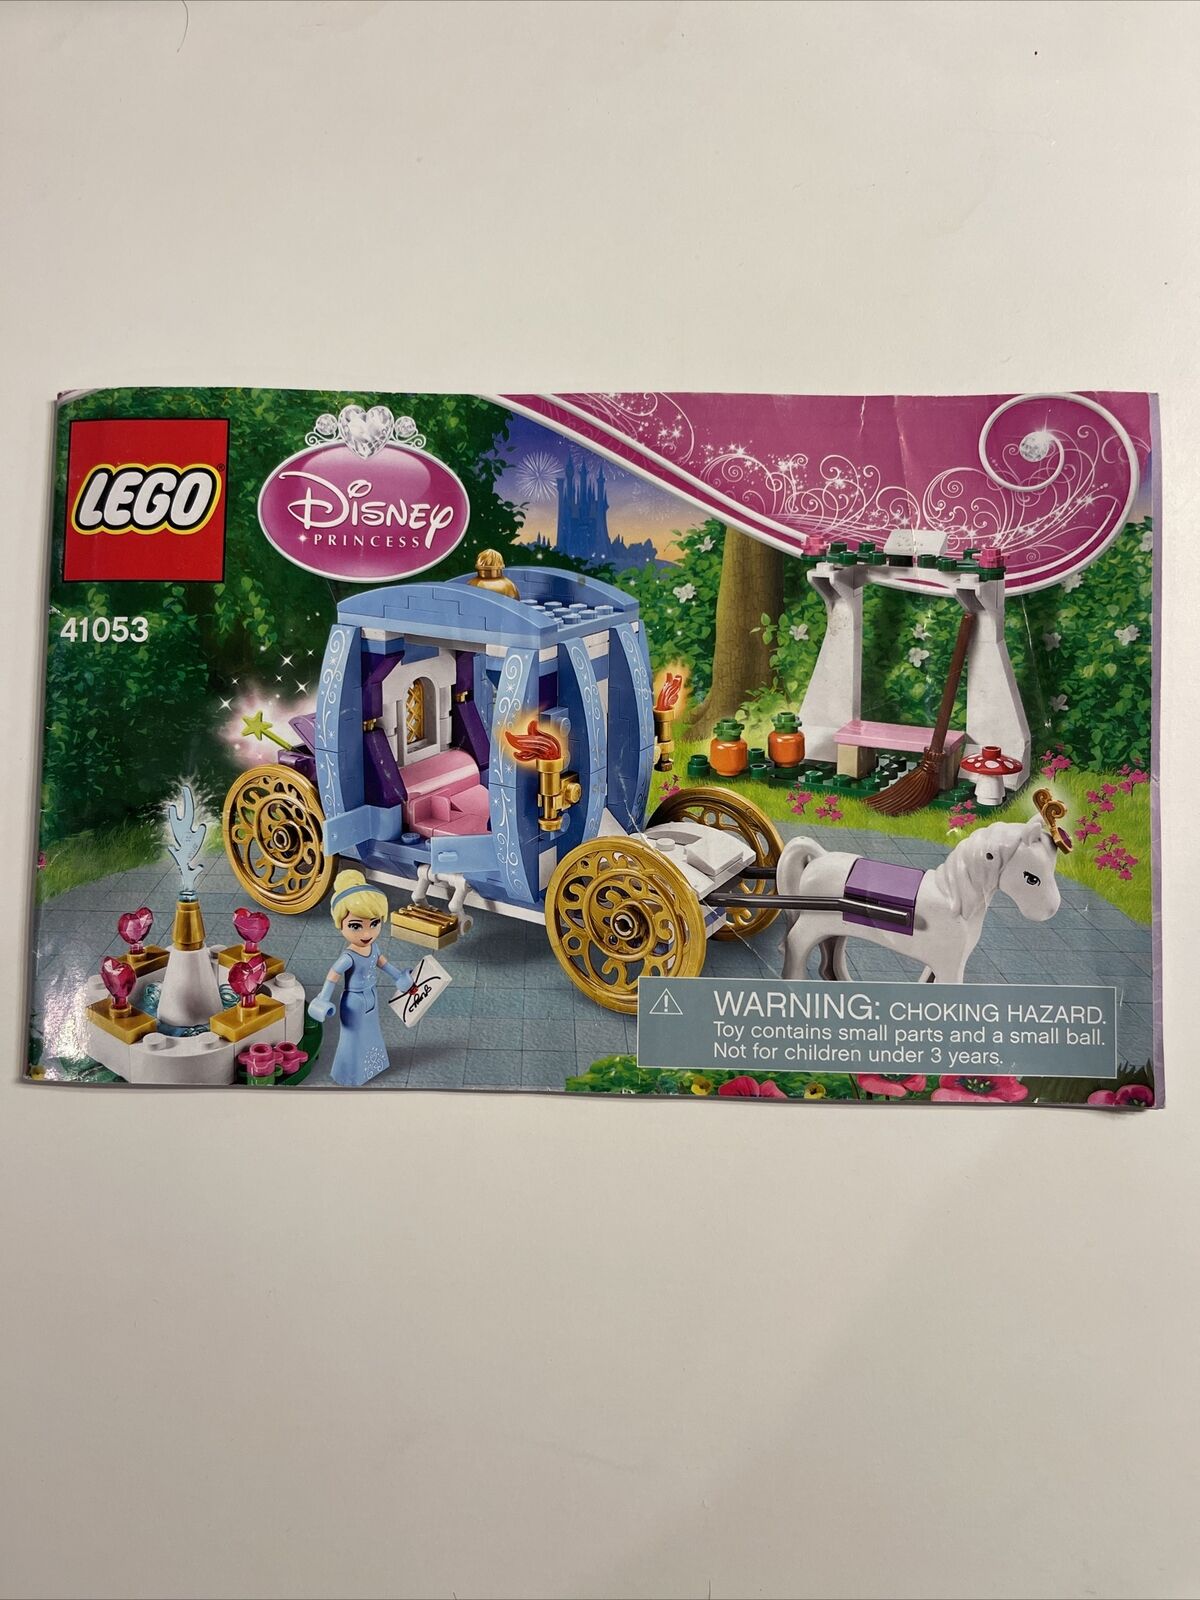 LEGO DISNEY 41053 Princess Cinderella's Dream Carriage set, 100% complete